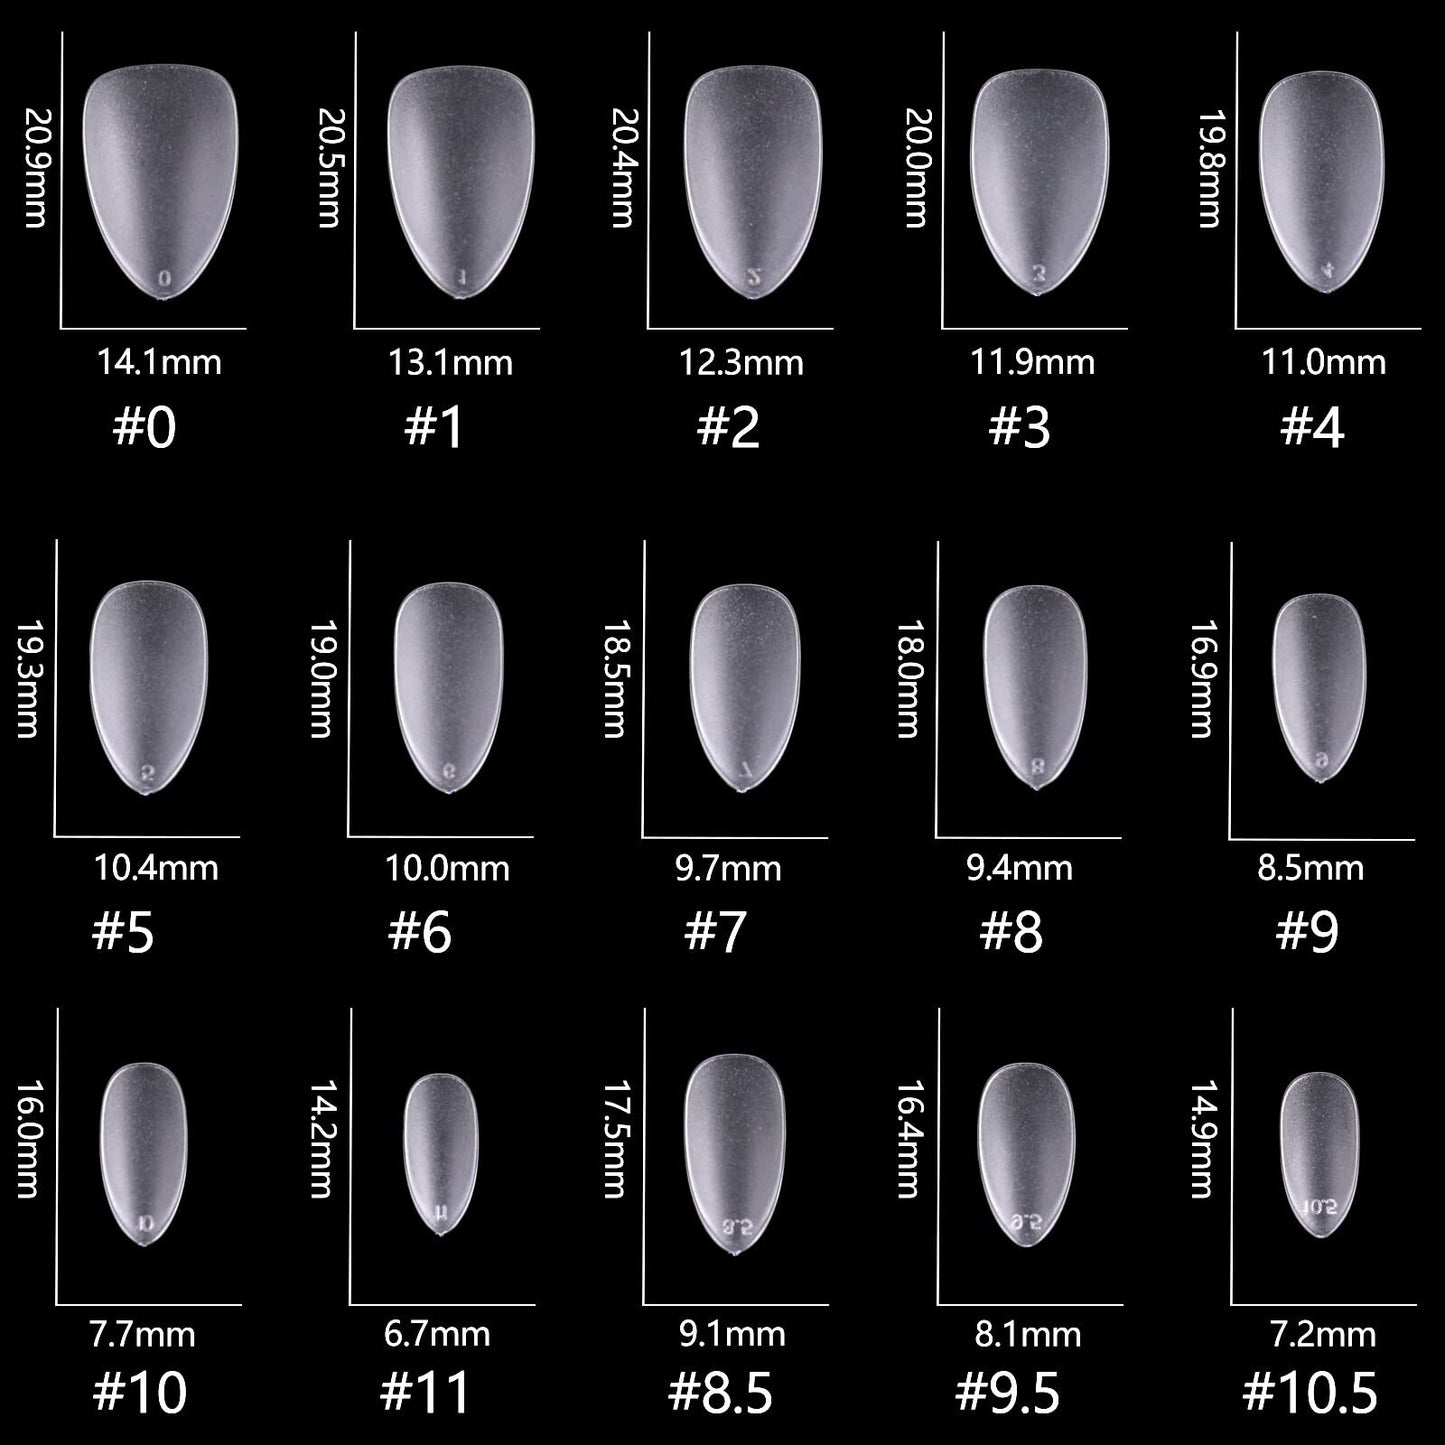 STZPRONAIL 15 Grids Fake Nail Tips Kit 300pcs Press on Nails Full Matte Acrylic False Nail Tips Full Cover False Nails DIY Manicure Set Nail Extension Kit 15 Sizes for Manicure Professional Nail Art Accessories (Medium Almond)